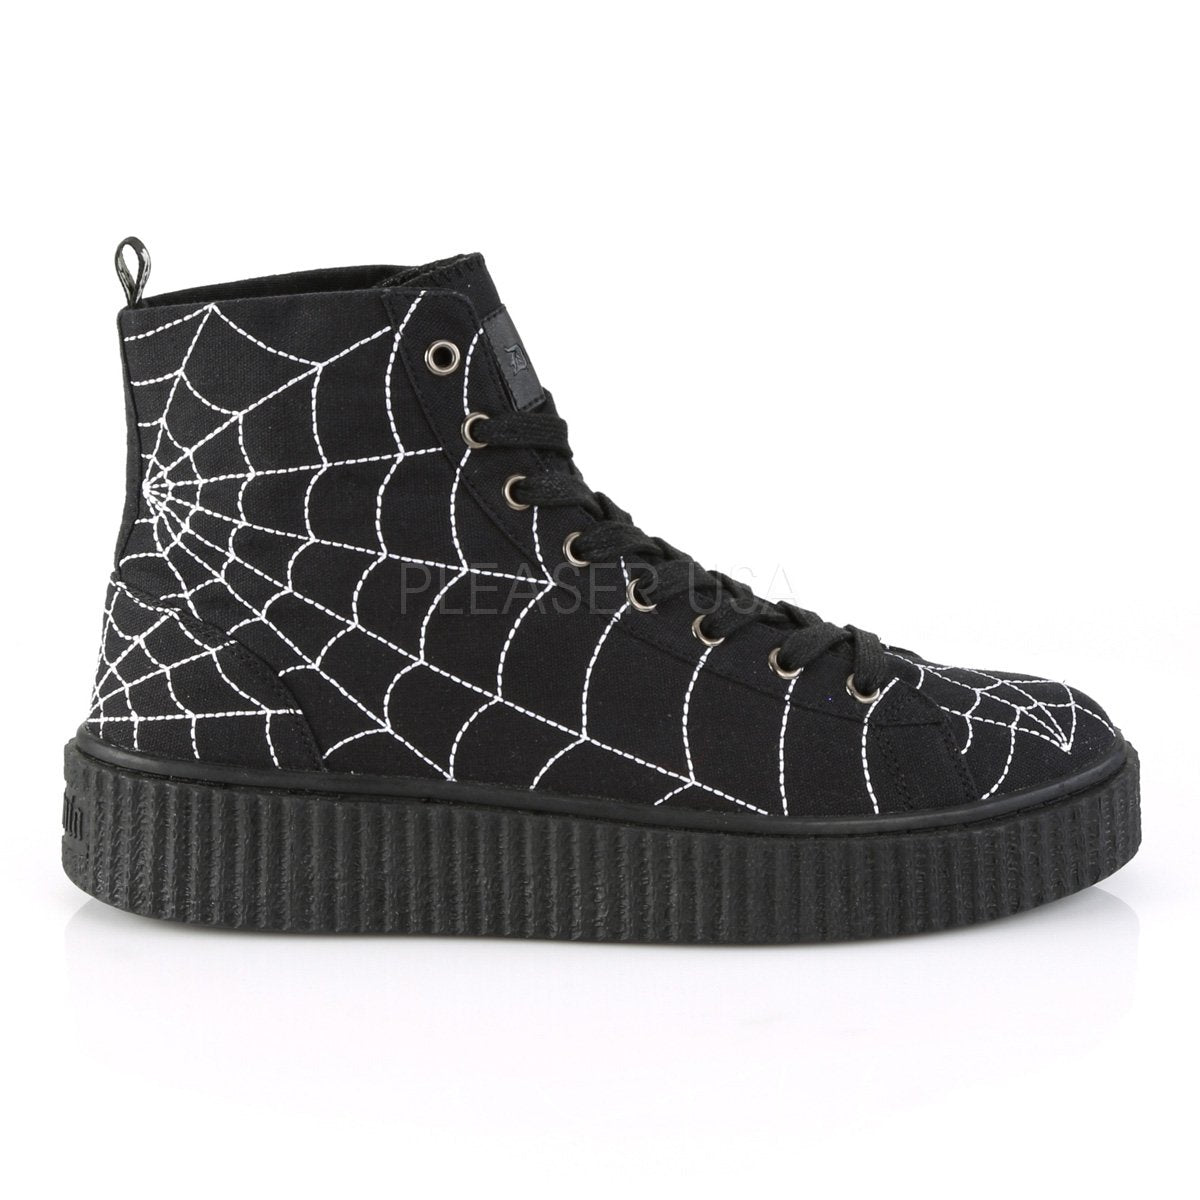 Spider Web Sneakers (Unisex)